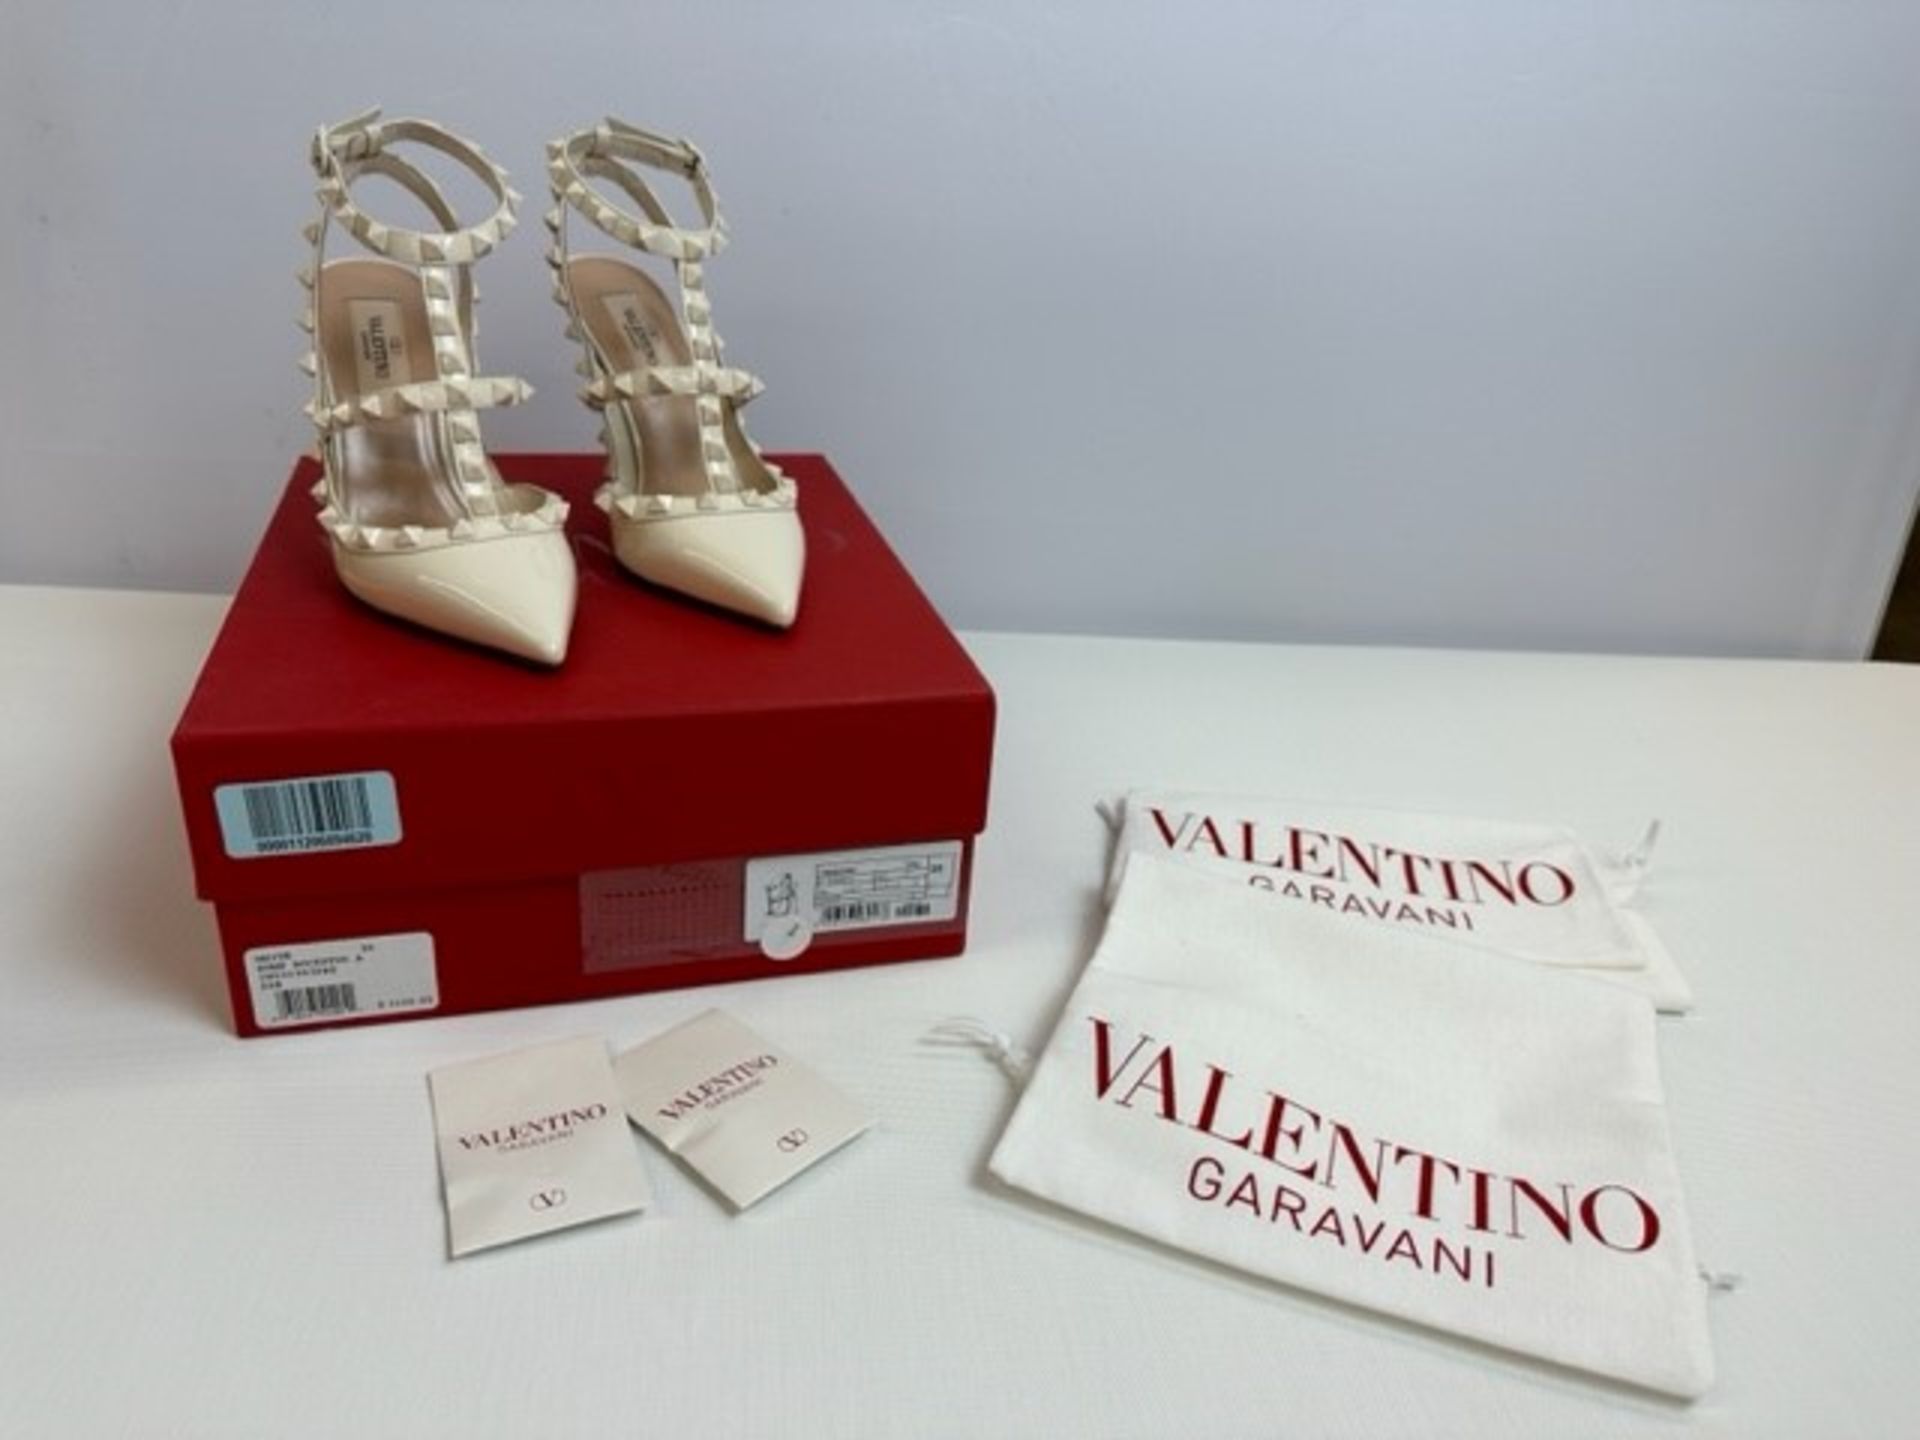 Valentino Garavani Pump Rockstud Ankle Pump Heel Size: 35, Color: White, Retail Price: $1100 - Image 3 of 5